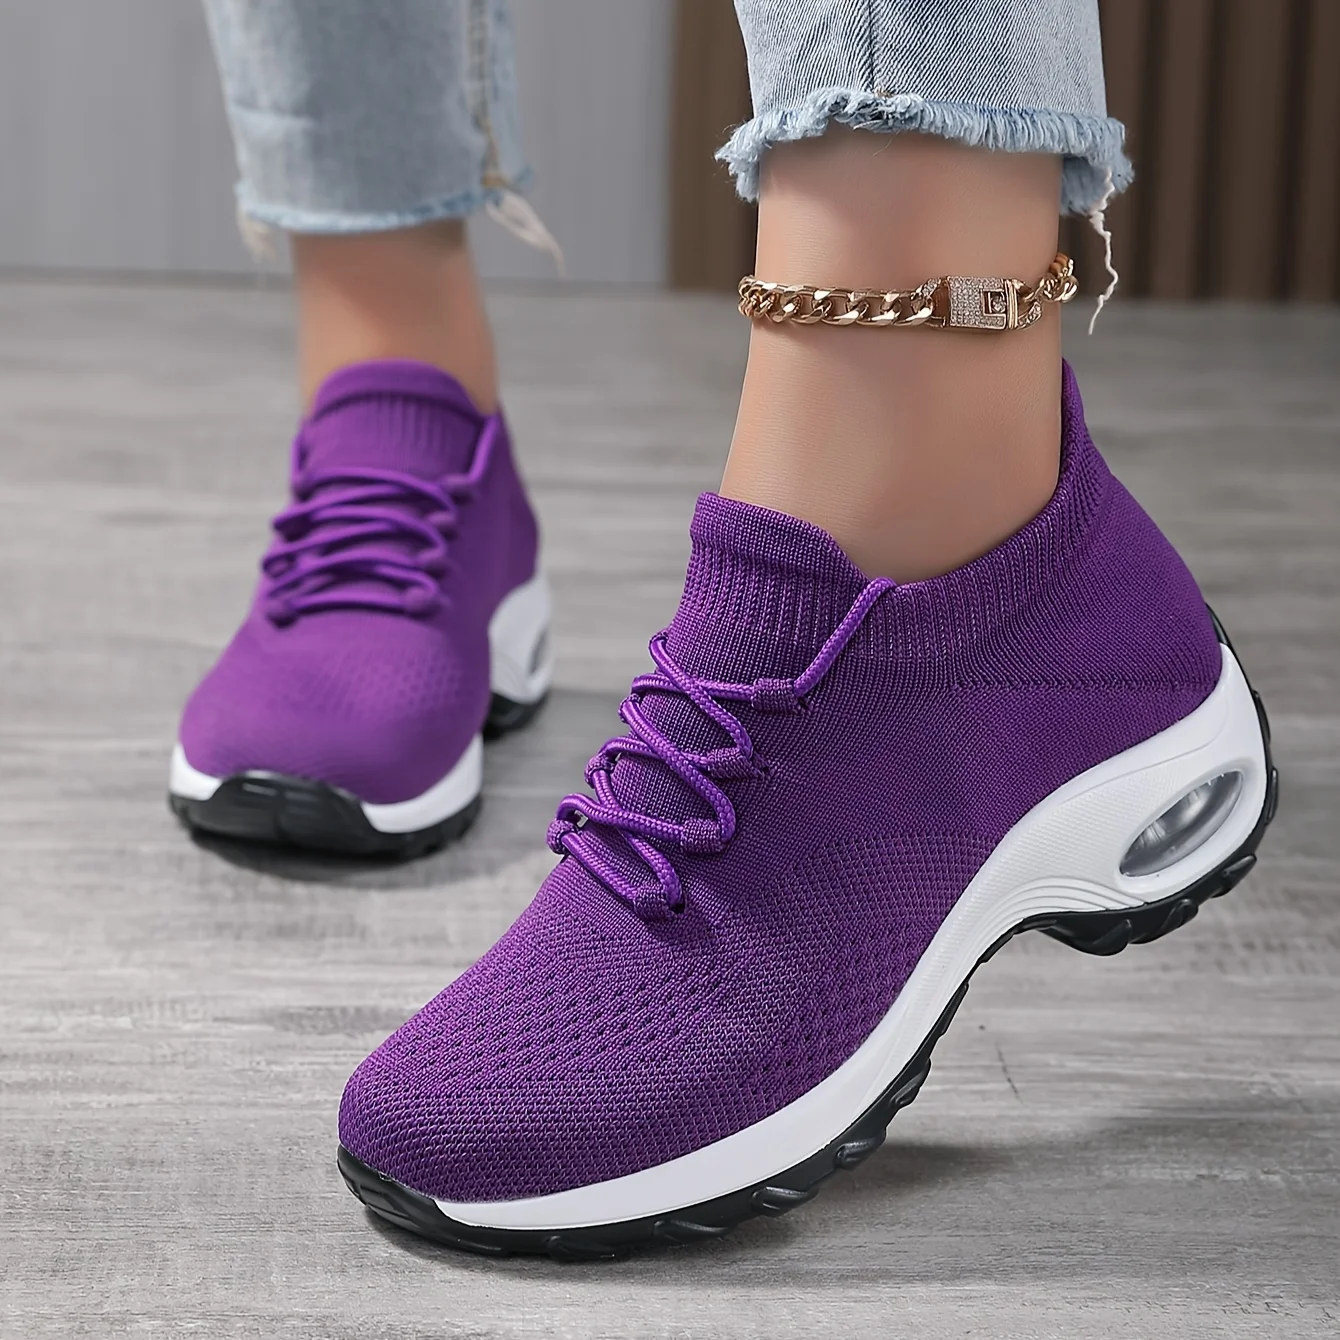 

Women Sock Sneakers Casual Walking Shoes Fashion Mesh Shoes Tennis Athletic Shoes Lightweight Air Cushion Running Shoes 1862 t